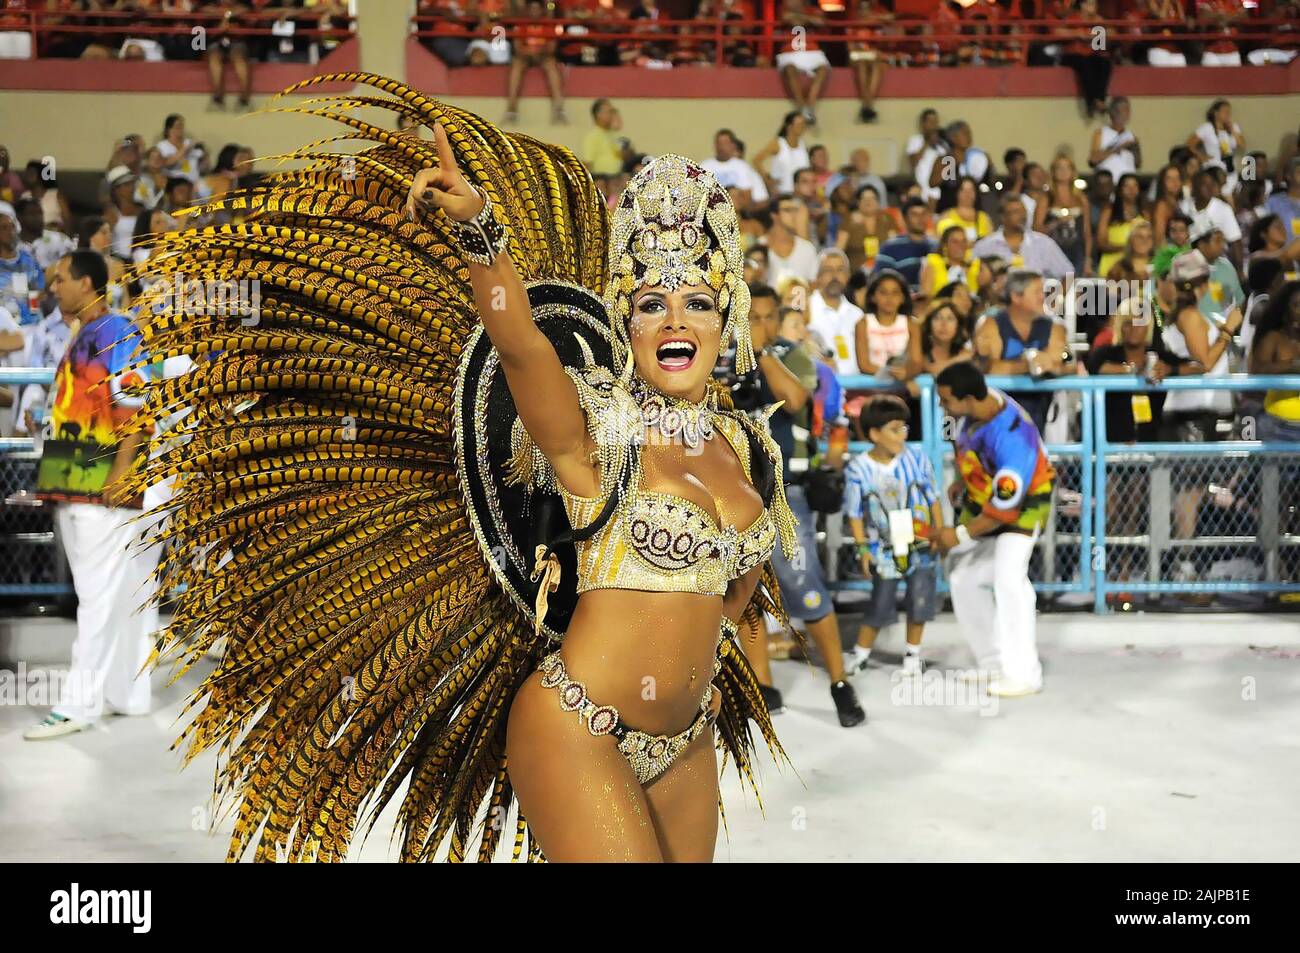 Rio de Janeiro, Brasilien, 16. Februar 2012. Parade der Sambaschulen in Rio de Janeiro Karneval, am Sambadrome, in der Stadt von Rio de Janeir Stockfoto